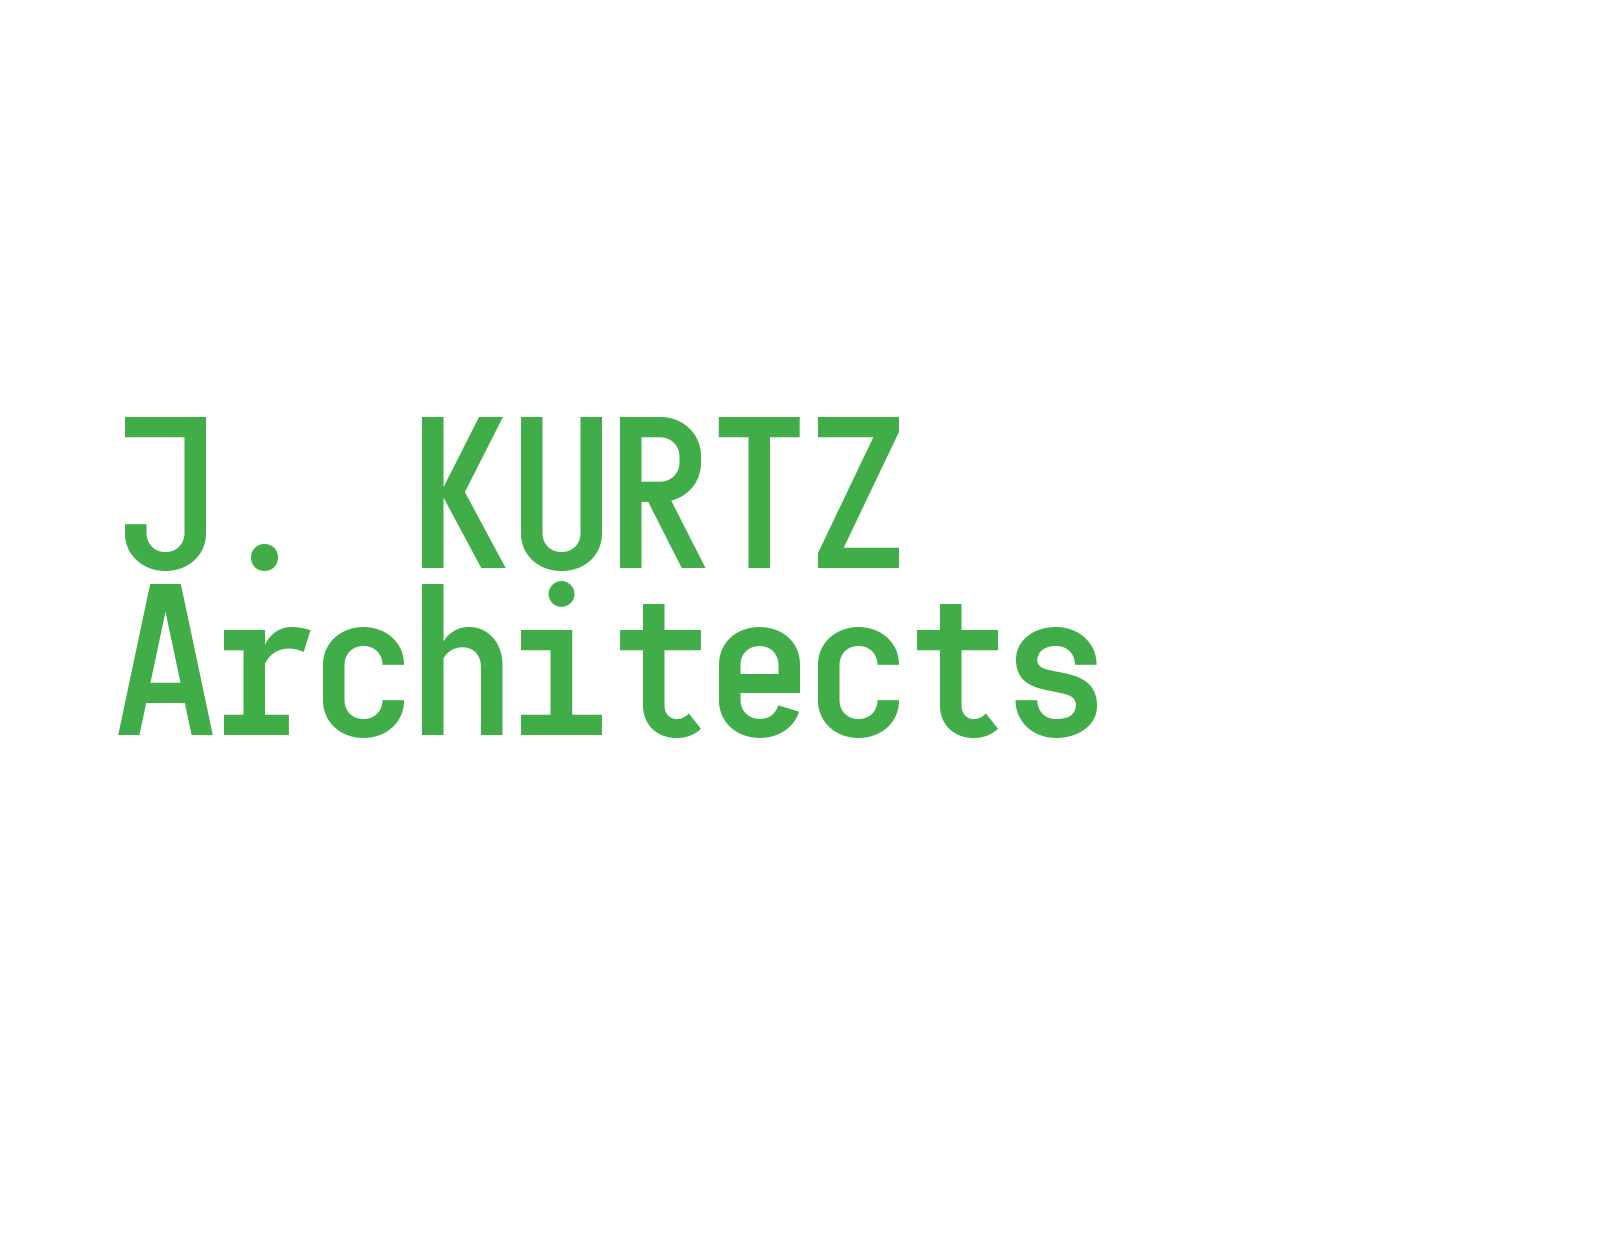 JKURTZ Architects